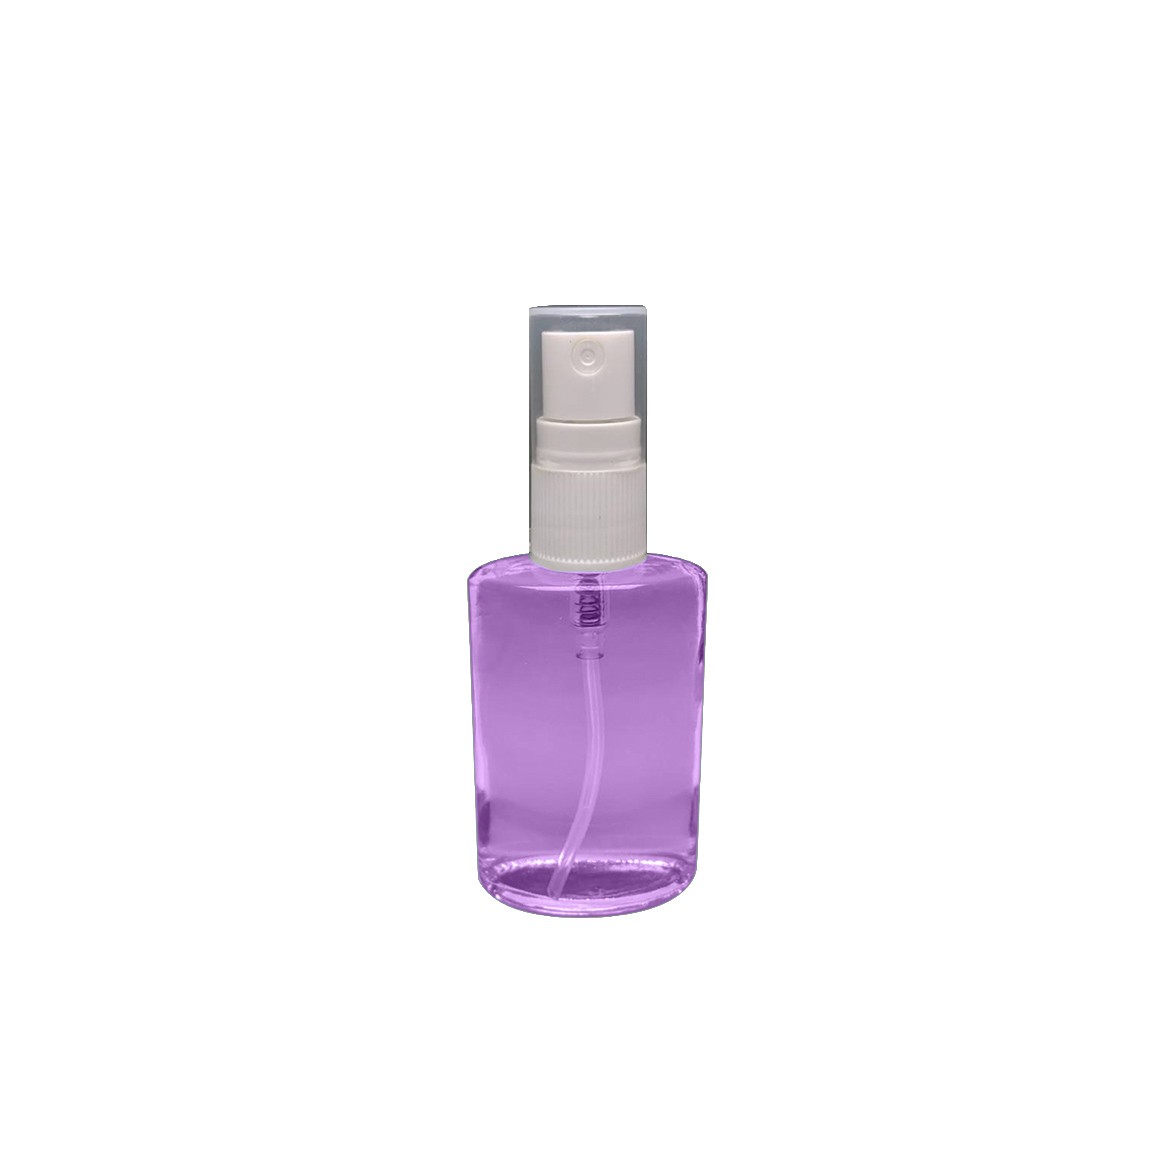 Best selling item 35ml empty oval shape glass bottle 18/415 neck size for travel skincare packaging